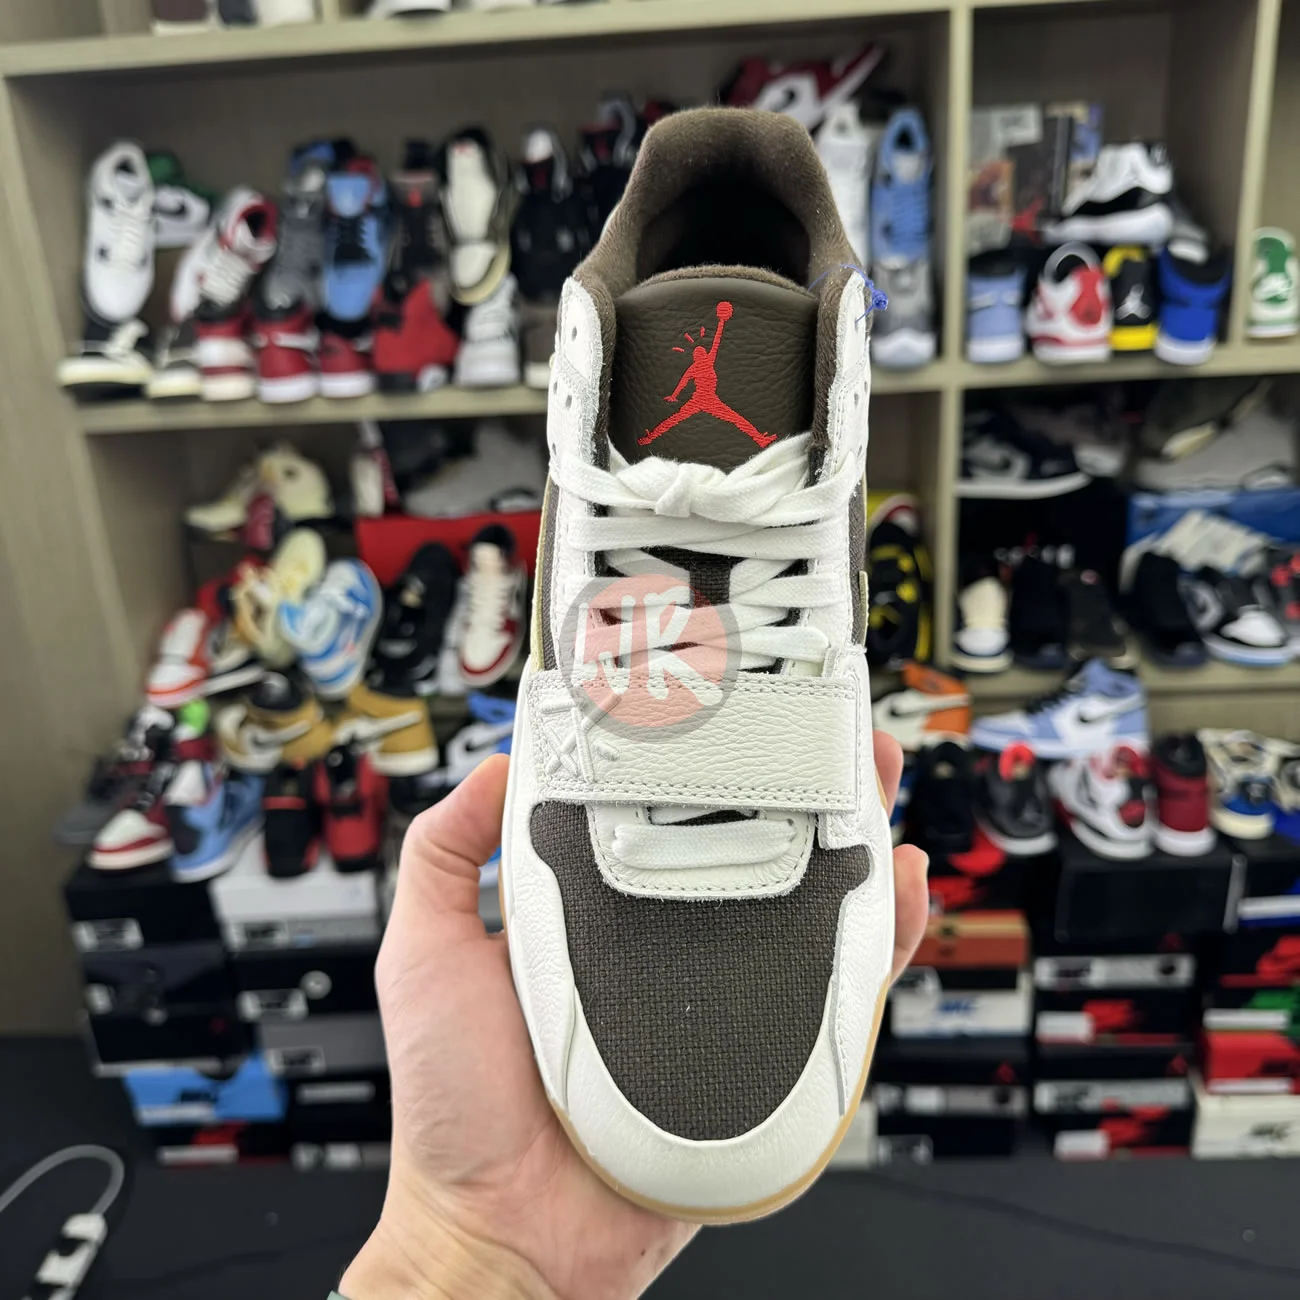 Travis Scott X Jordan Cut The Check Trainer Release Date Ljr Sneakers (4) - bc-ljr.net